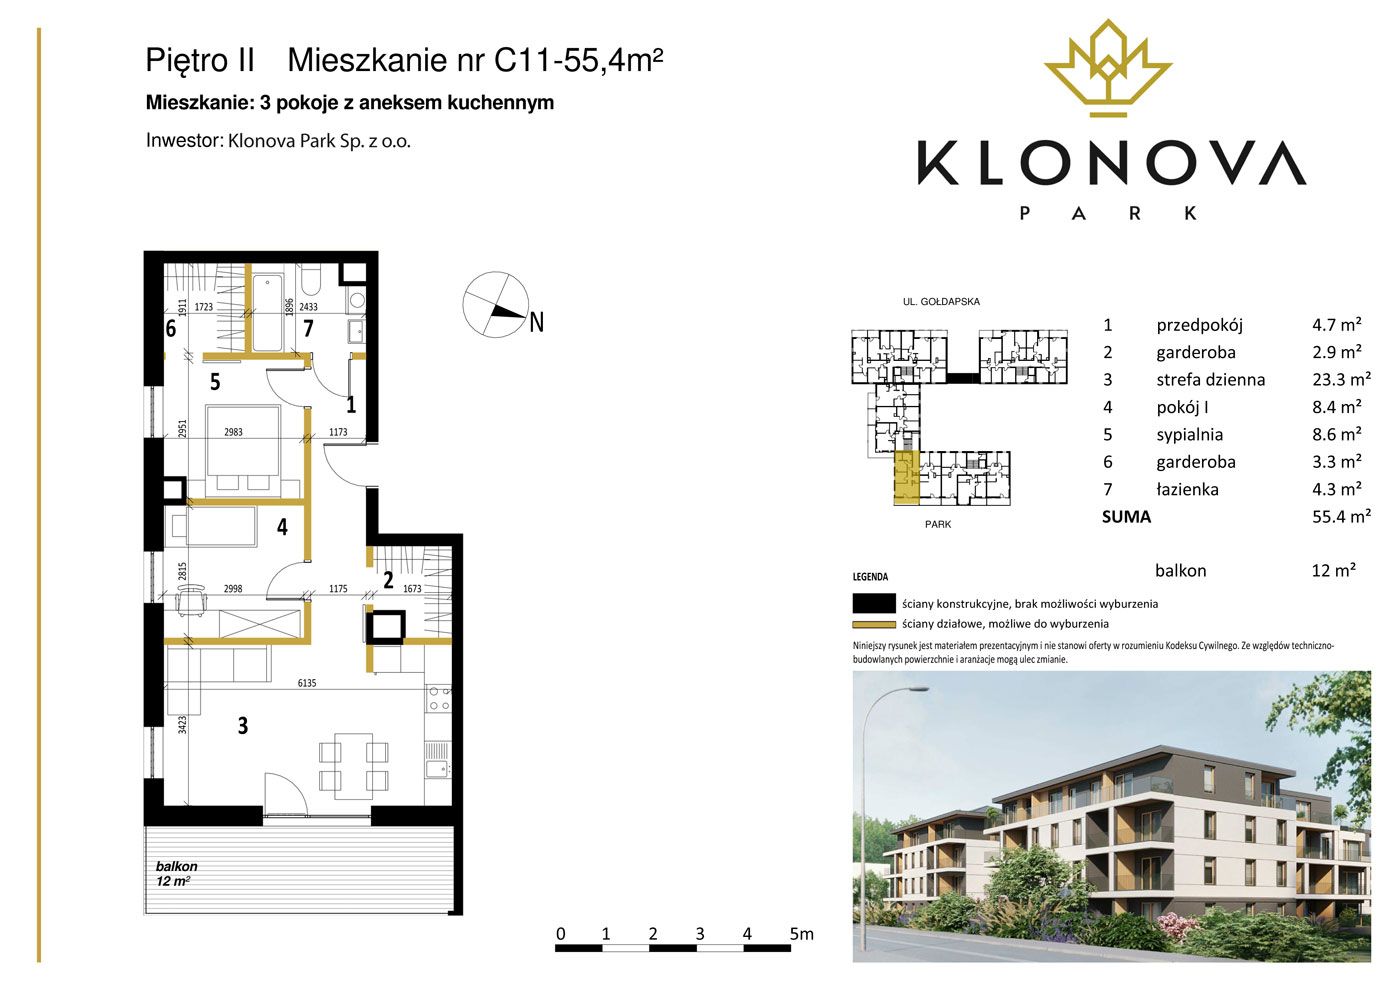 Apartamenty Klonova Park - Plan mieszkania C/11